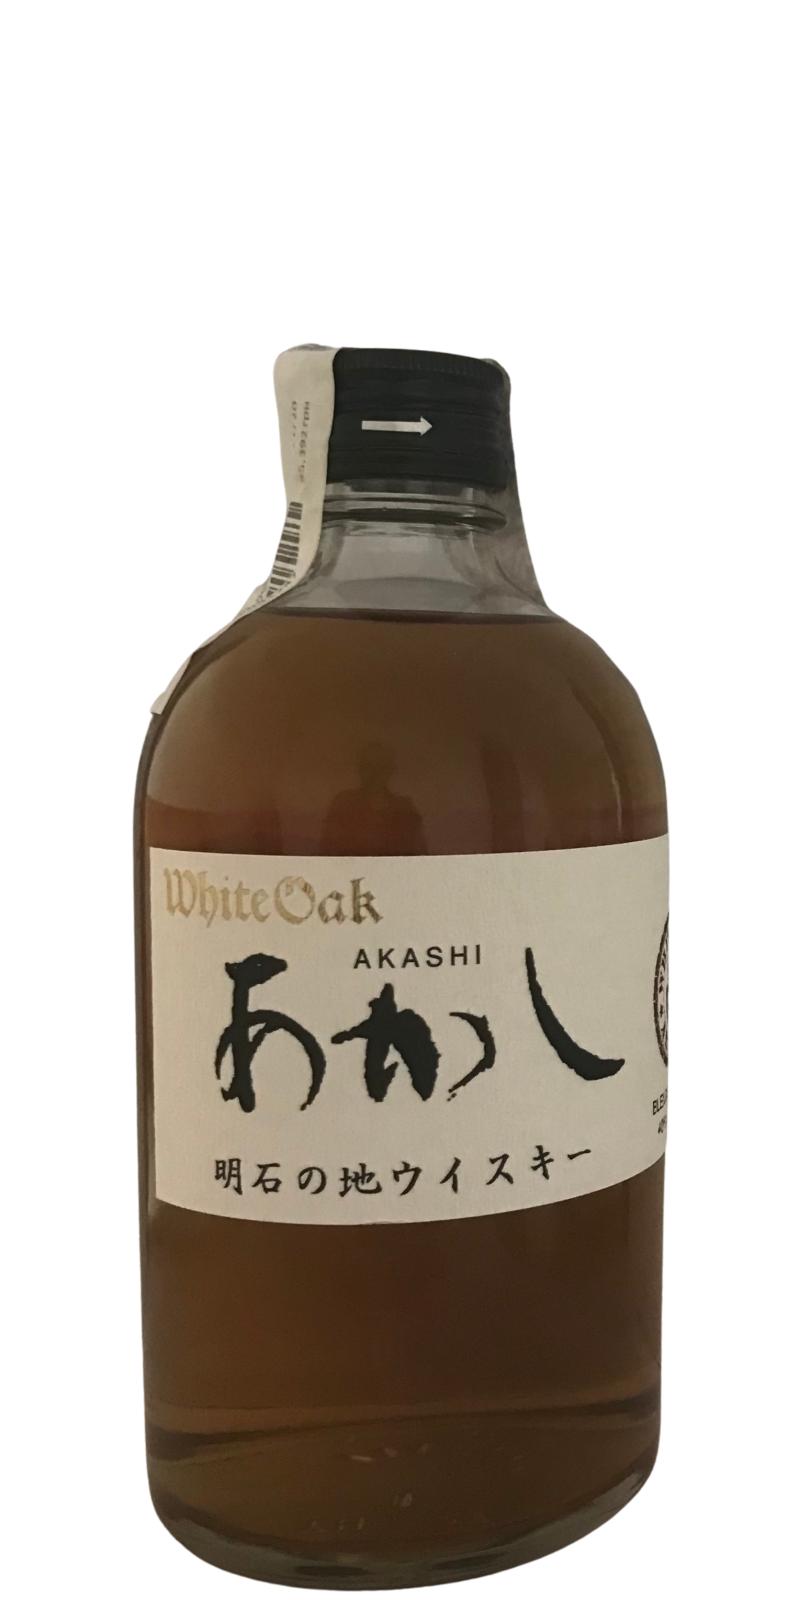 White Oak Akashi